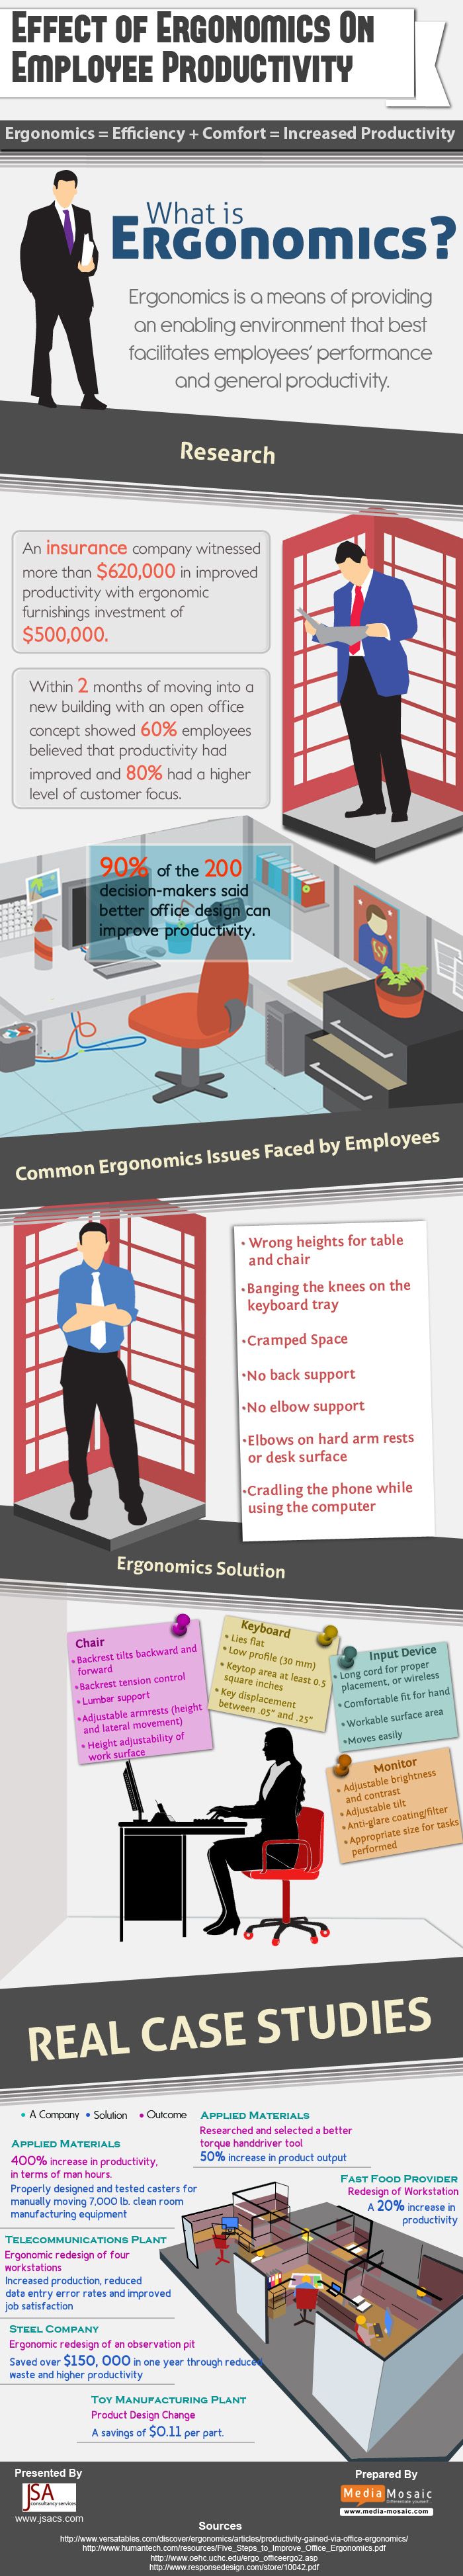 Effects of Ergonomics on Employee Productivity [Infographic]